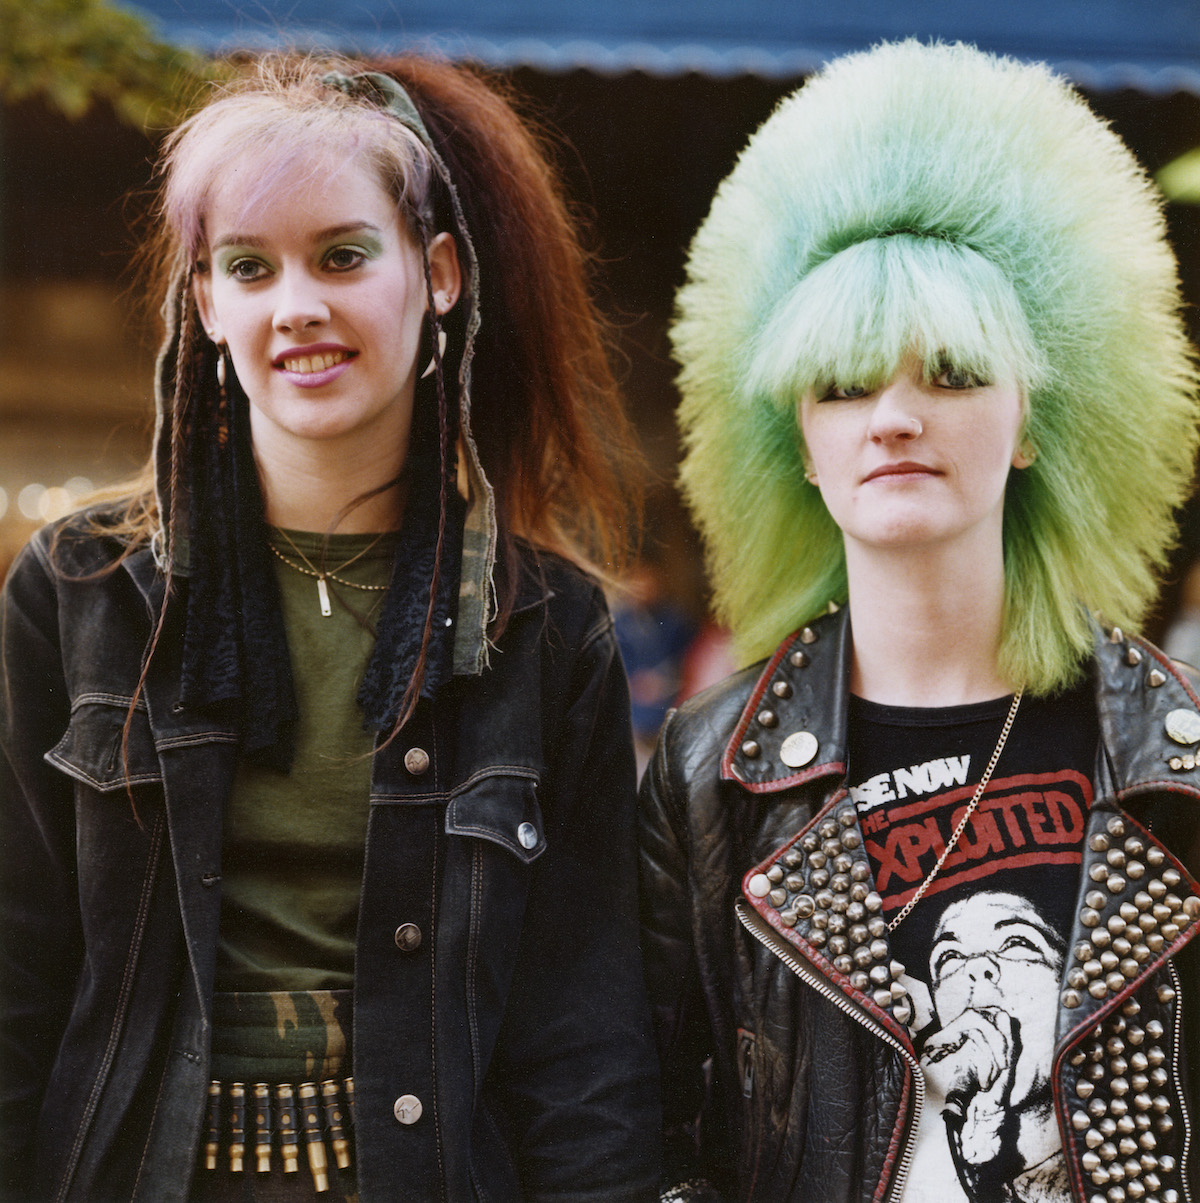 punks 1980s